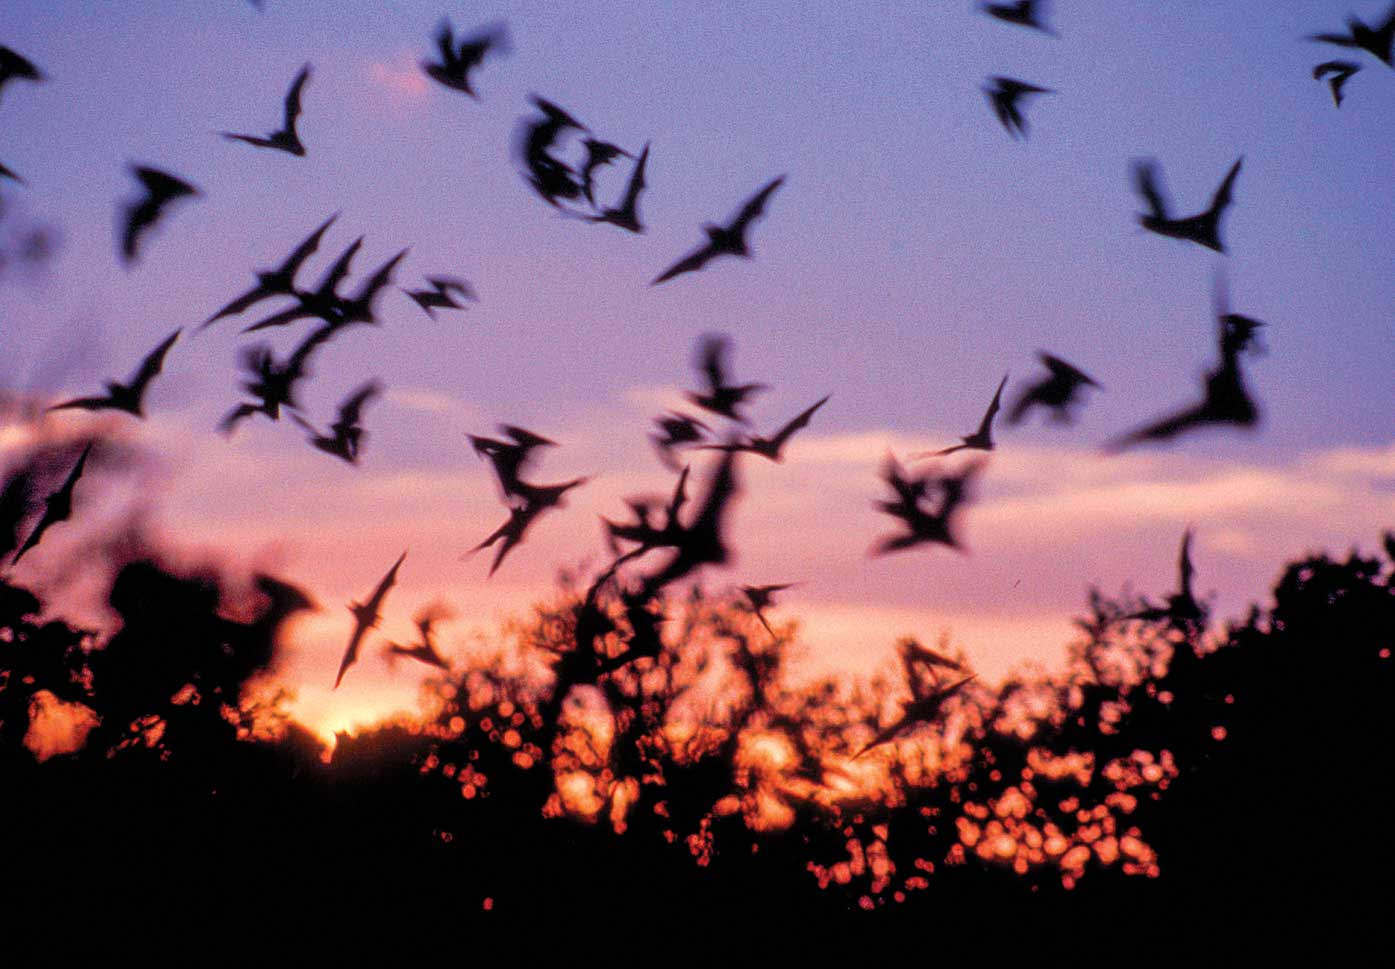 Bats take flight at sunset